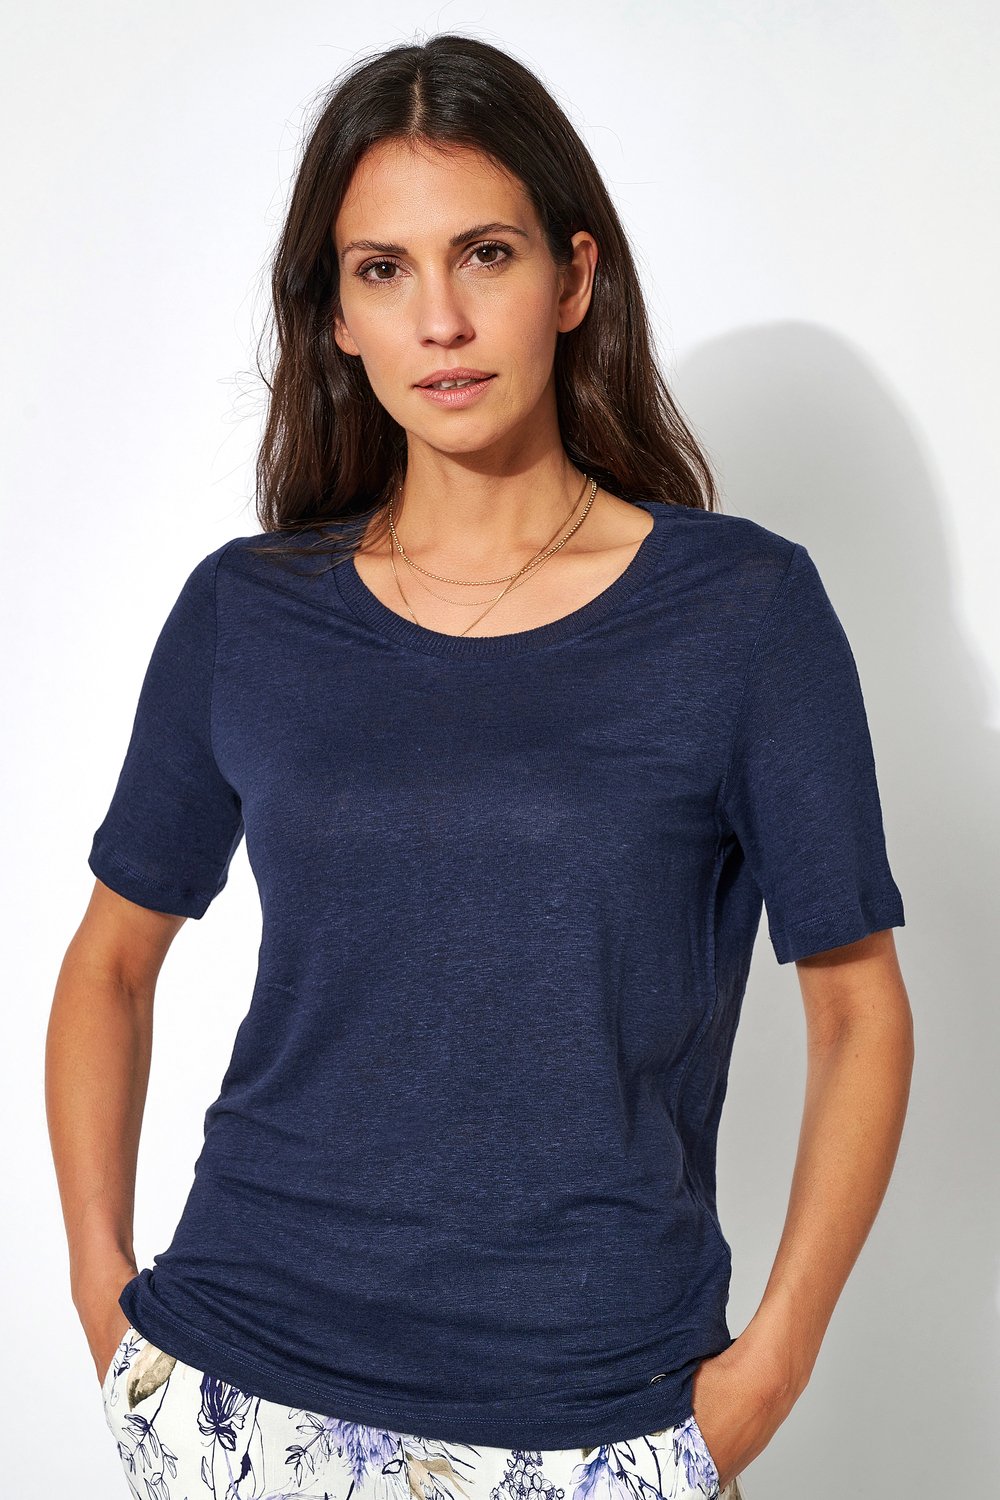 Comfy shirt made of linen | Style »Esra« dark blue